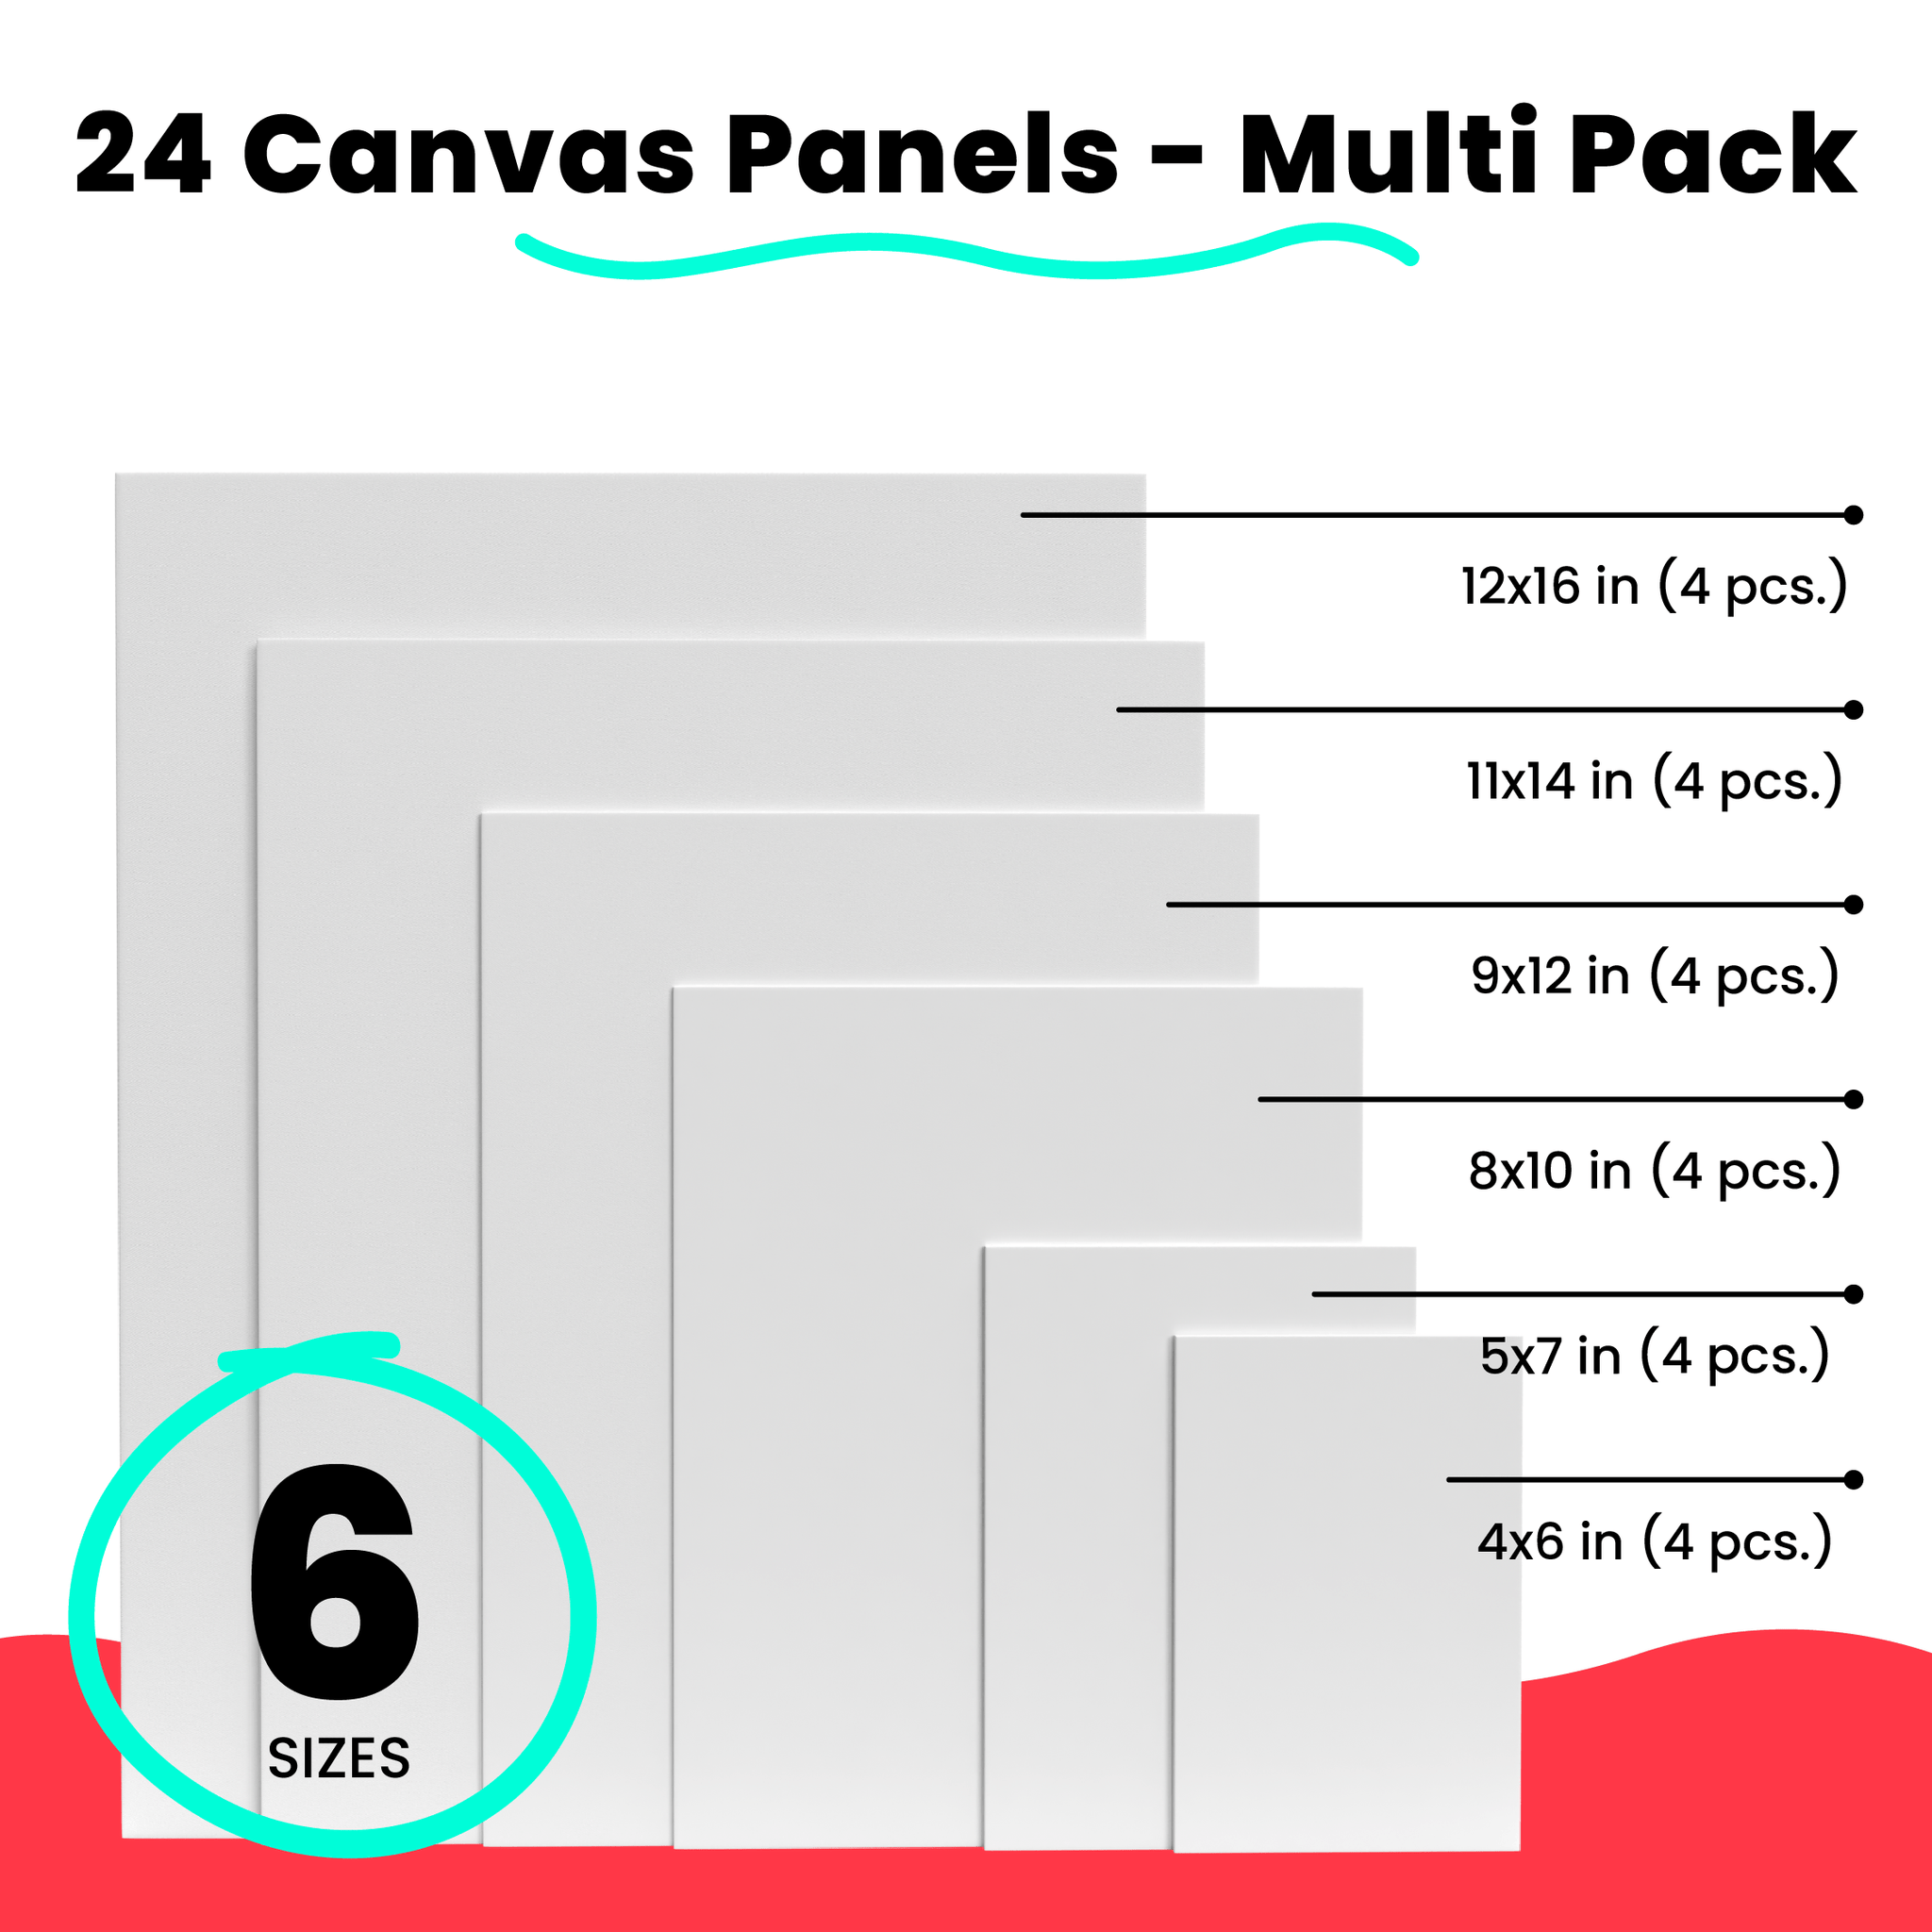 Painting Canvas Panels Variety Pack (24 Pack) - Chalkola Art Supply